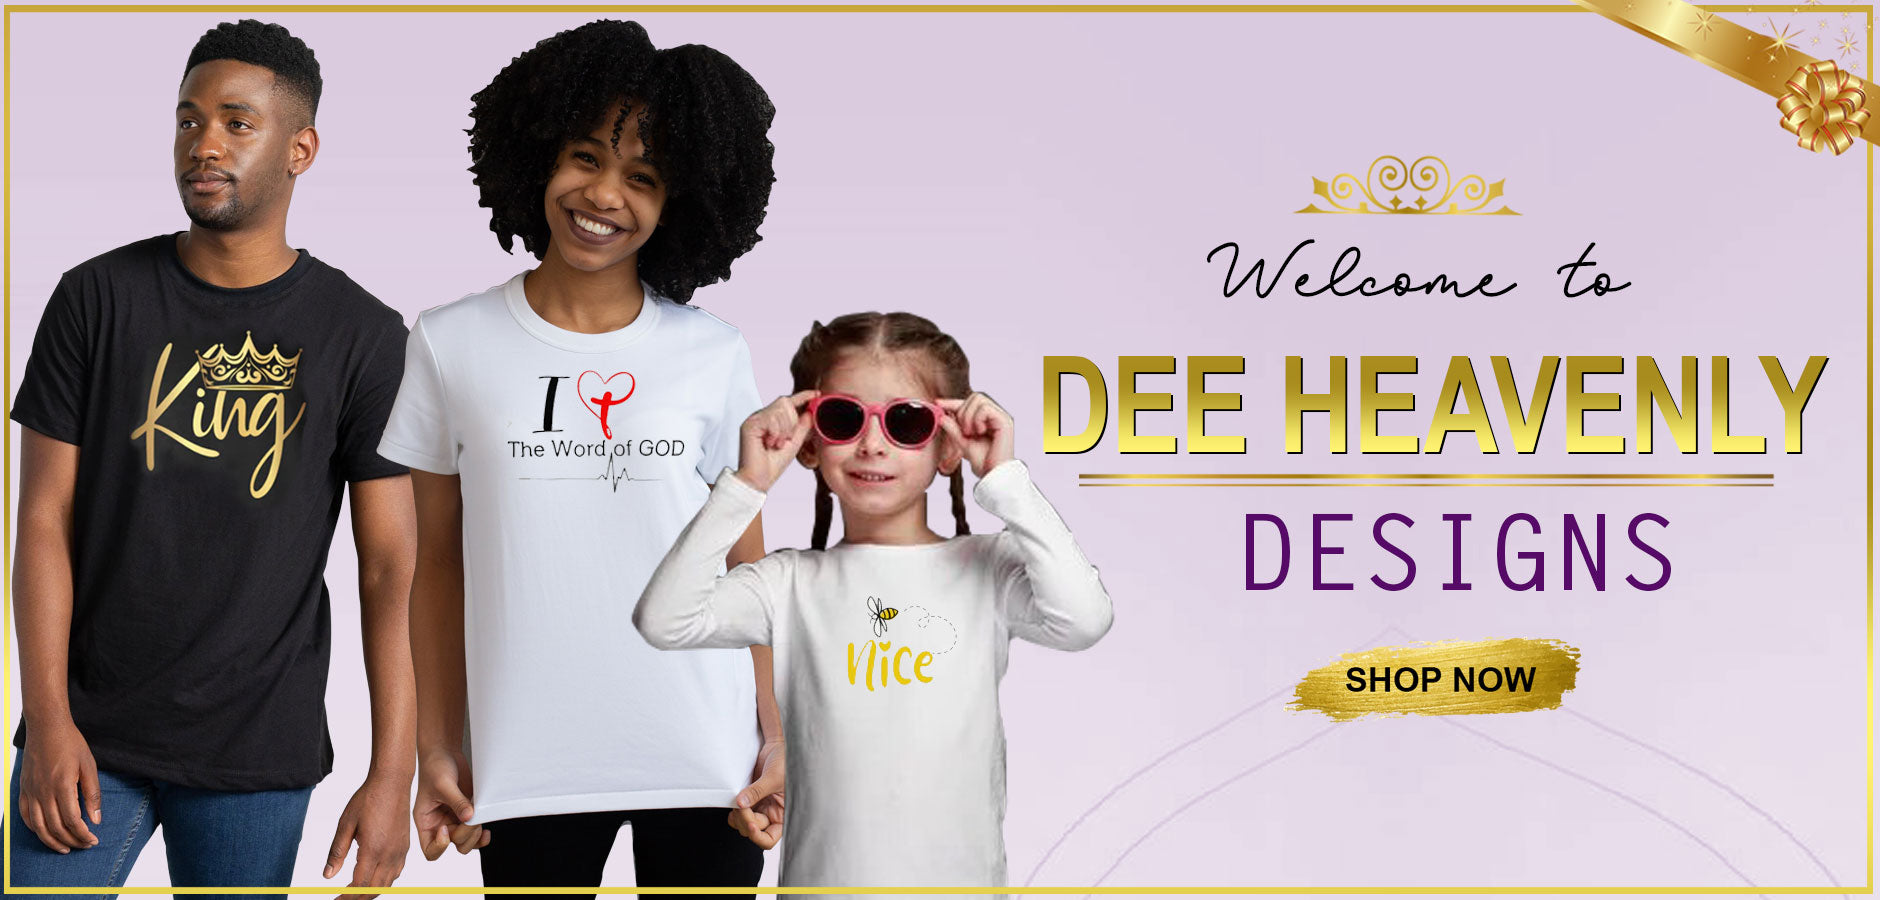 Dee Heavenly Designs 